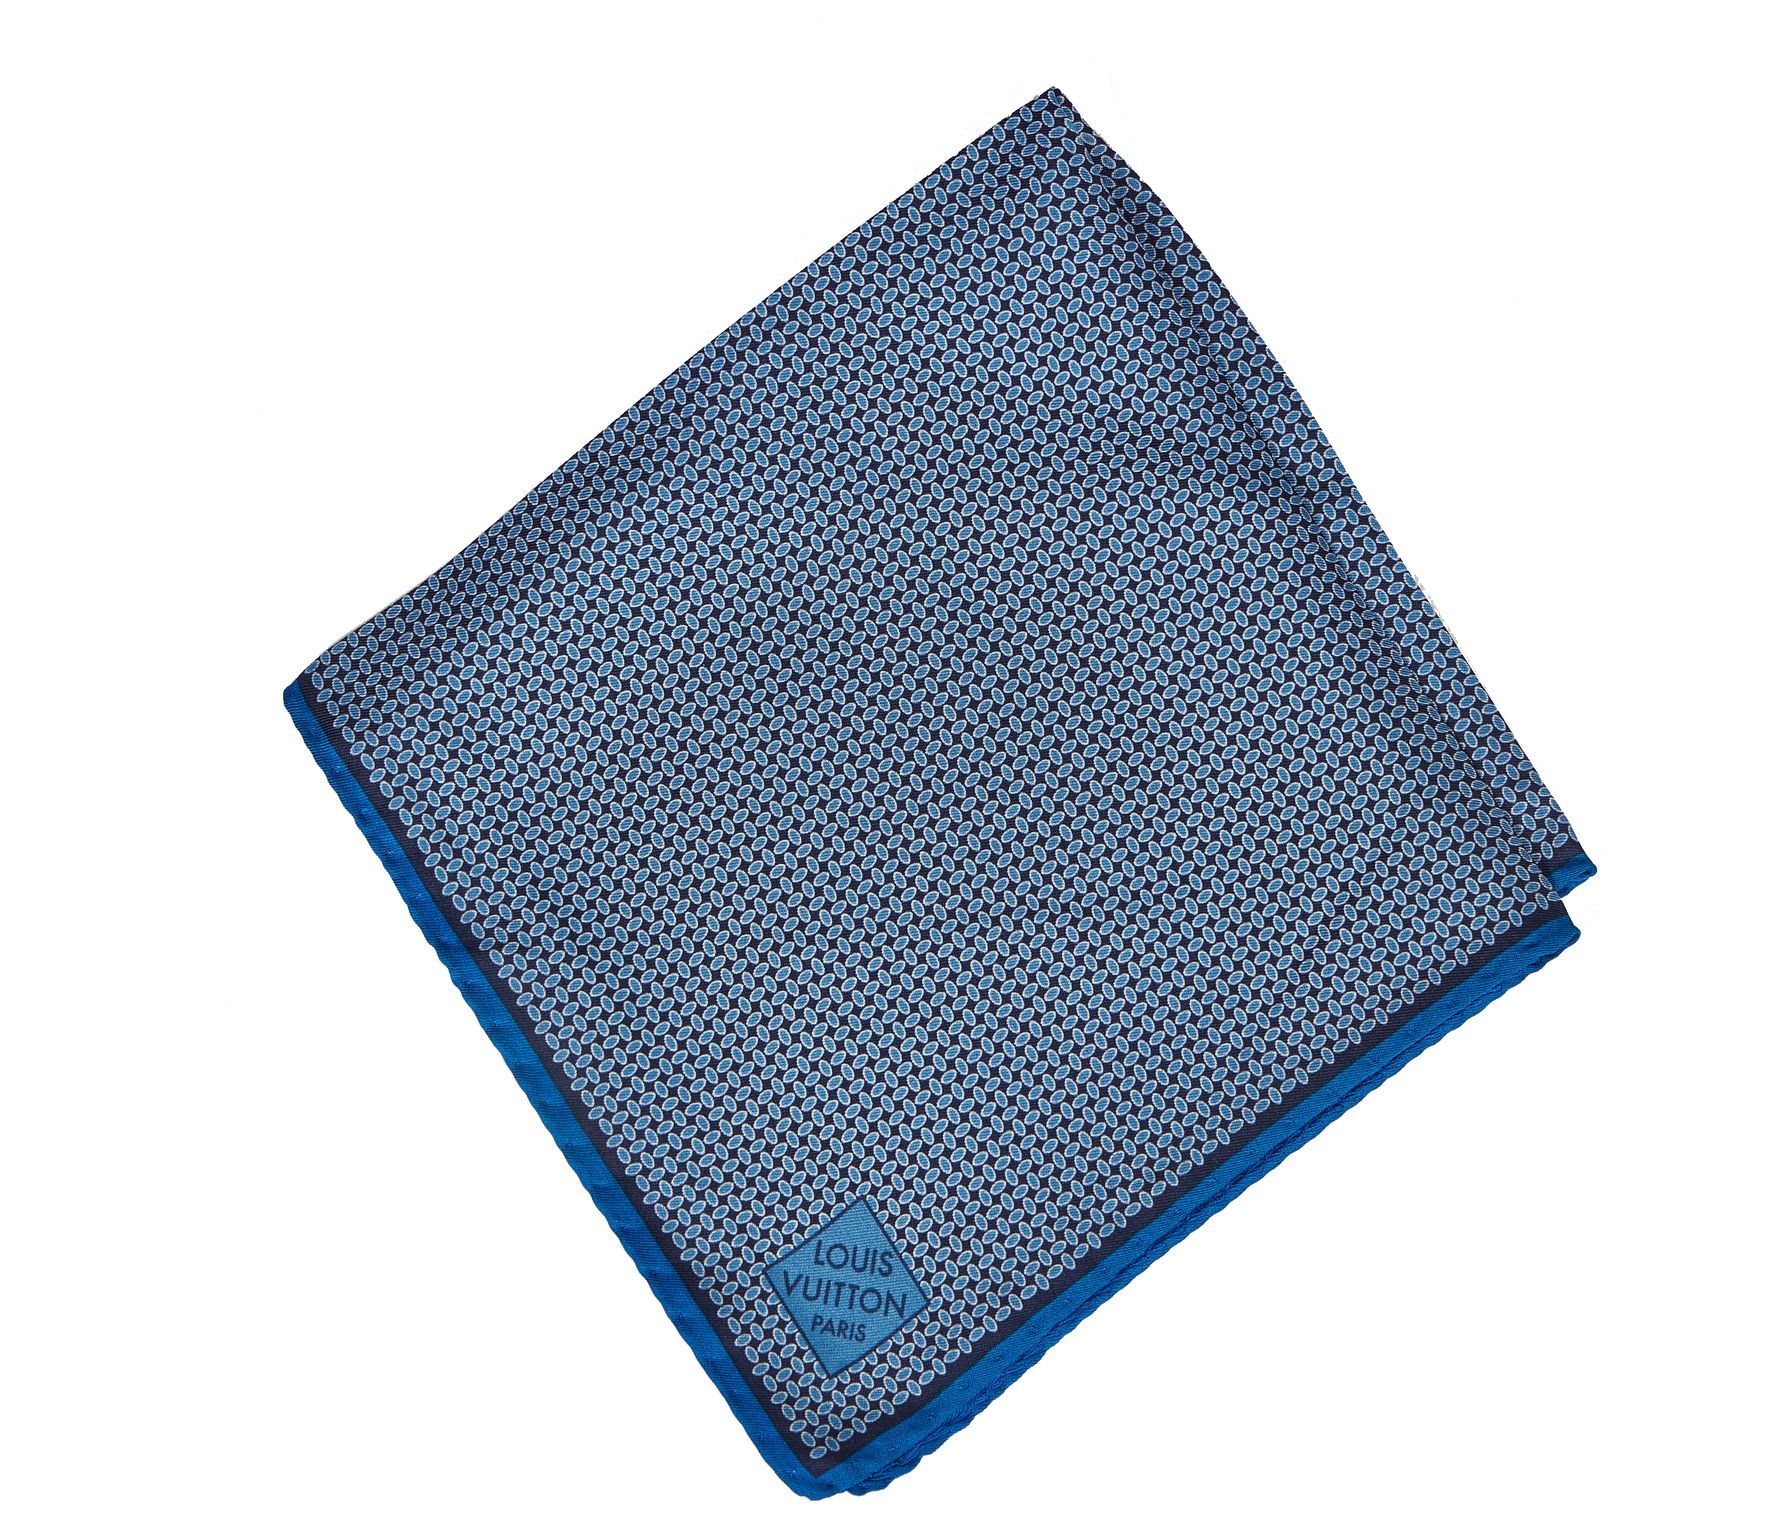 Vuitton Blue/Black Silk Pocket Square~P77612700